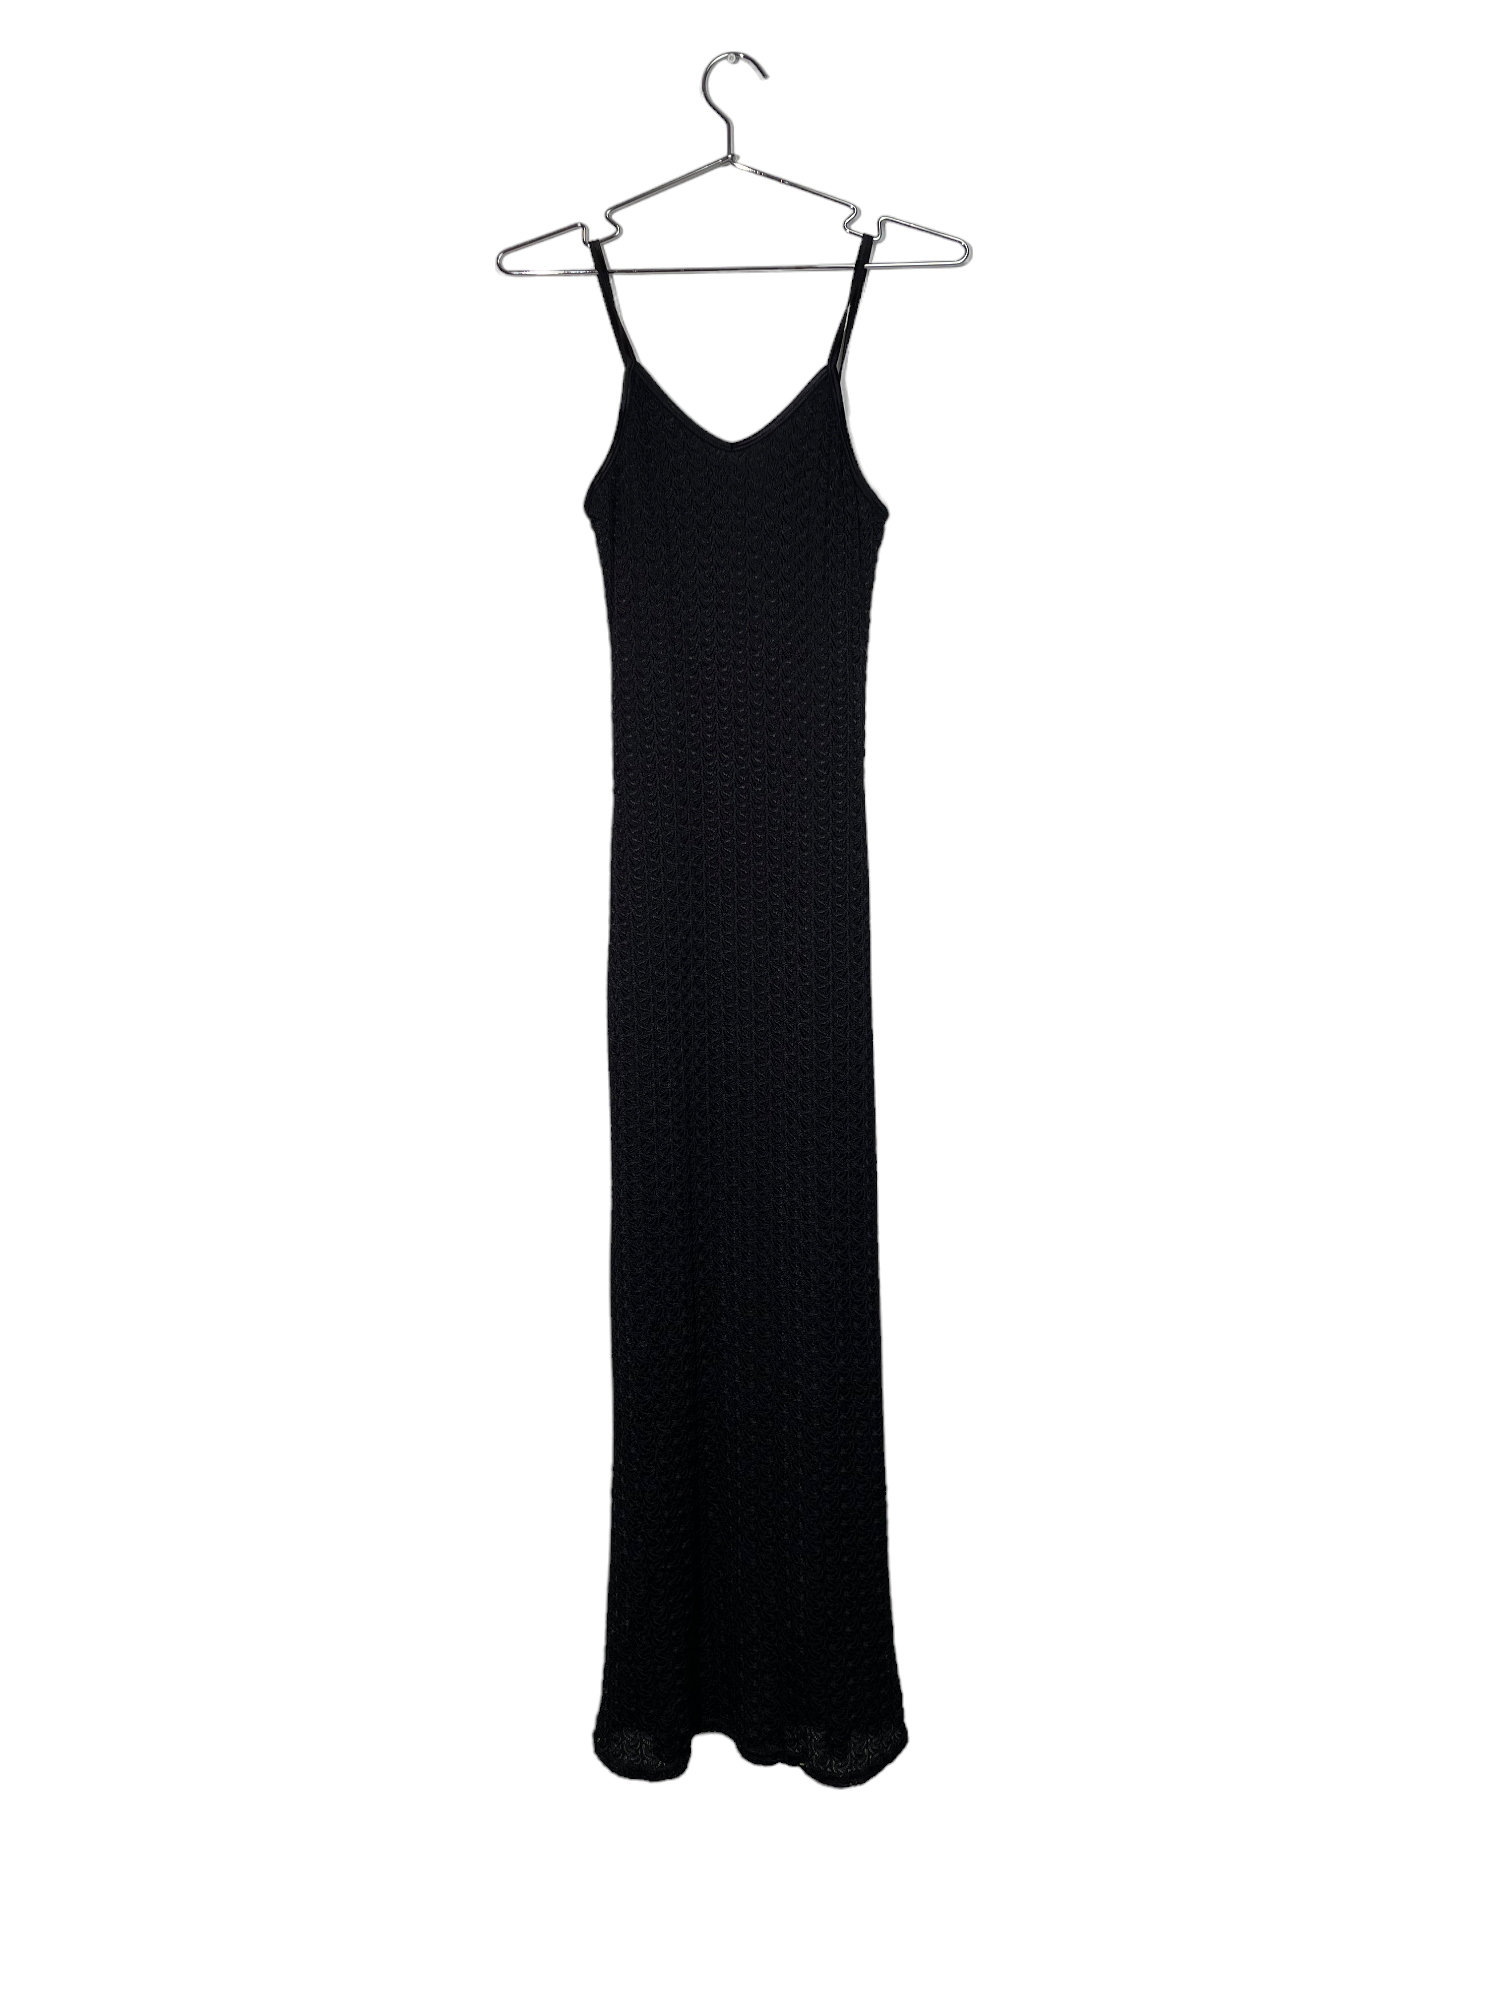 New Look Black Textured Slip Dress